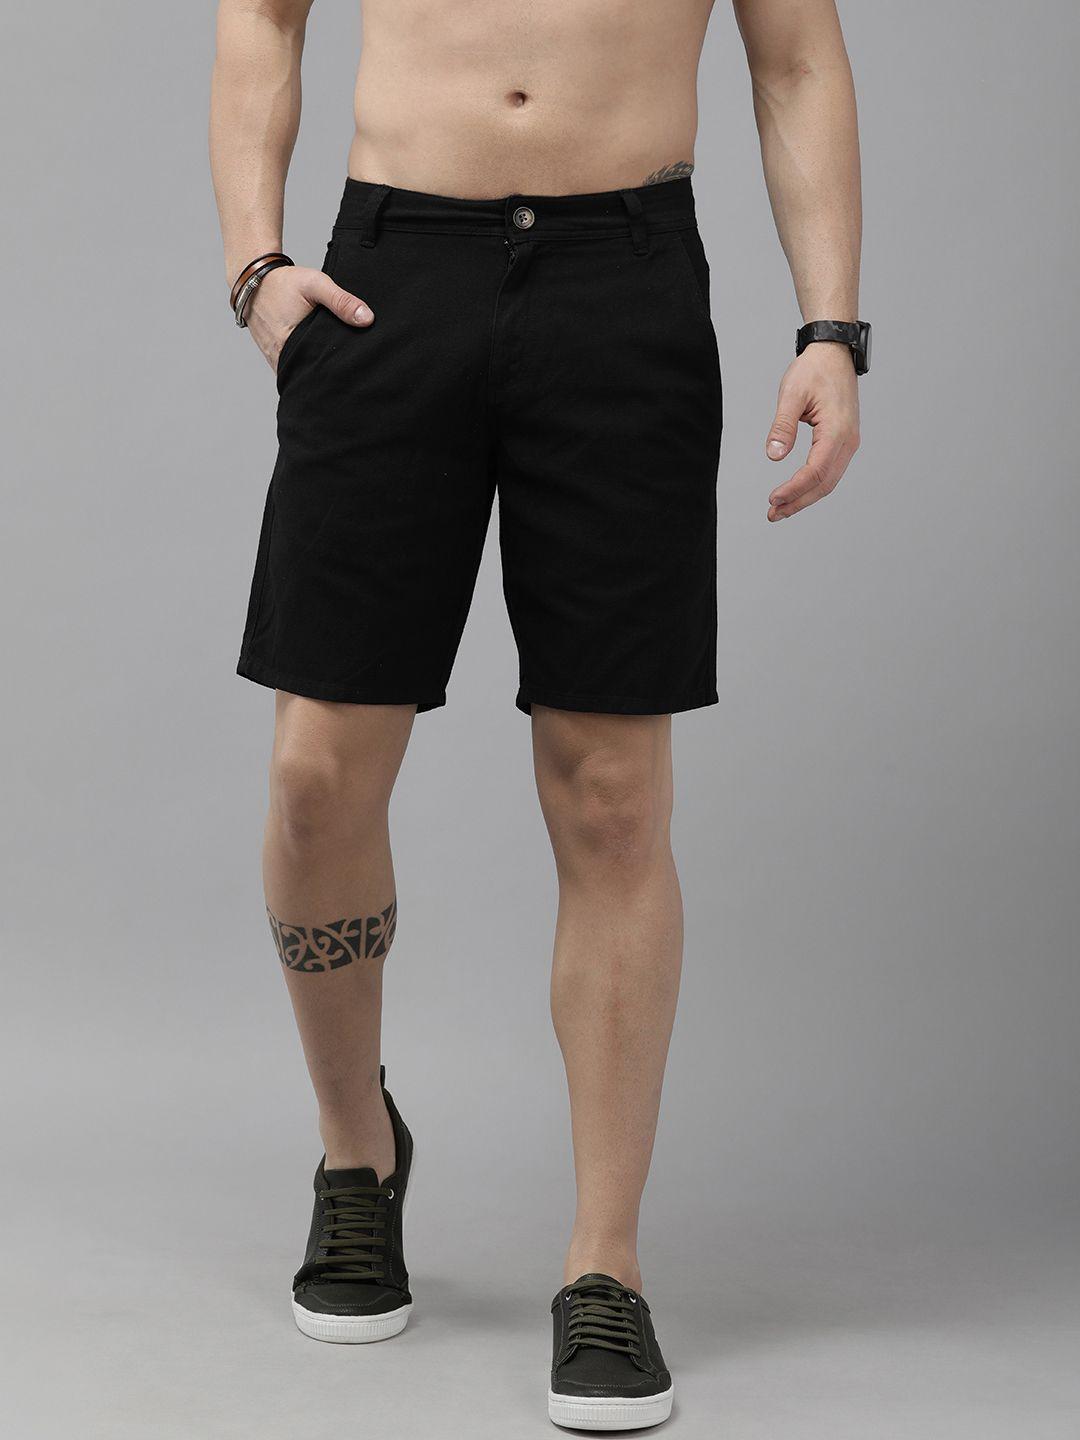 roadster men black slim fit cotton shorts